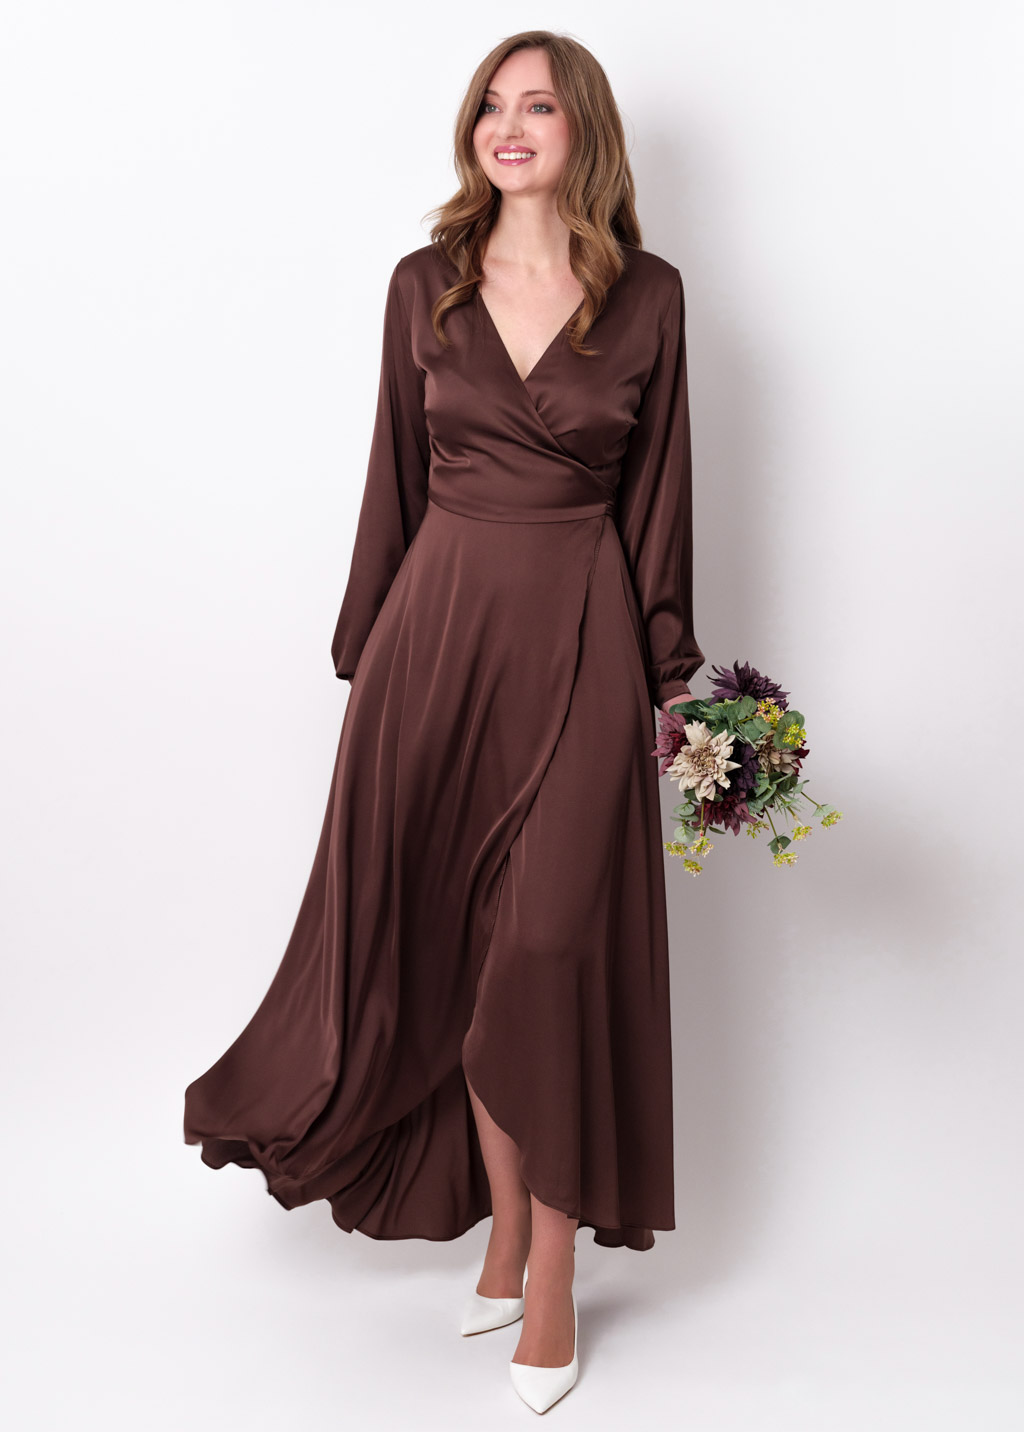 Chocolate brown silk long wrap dress